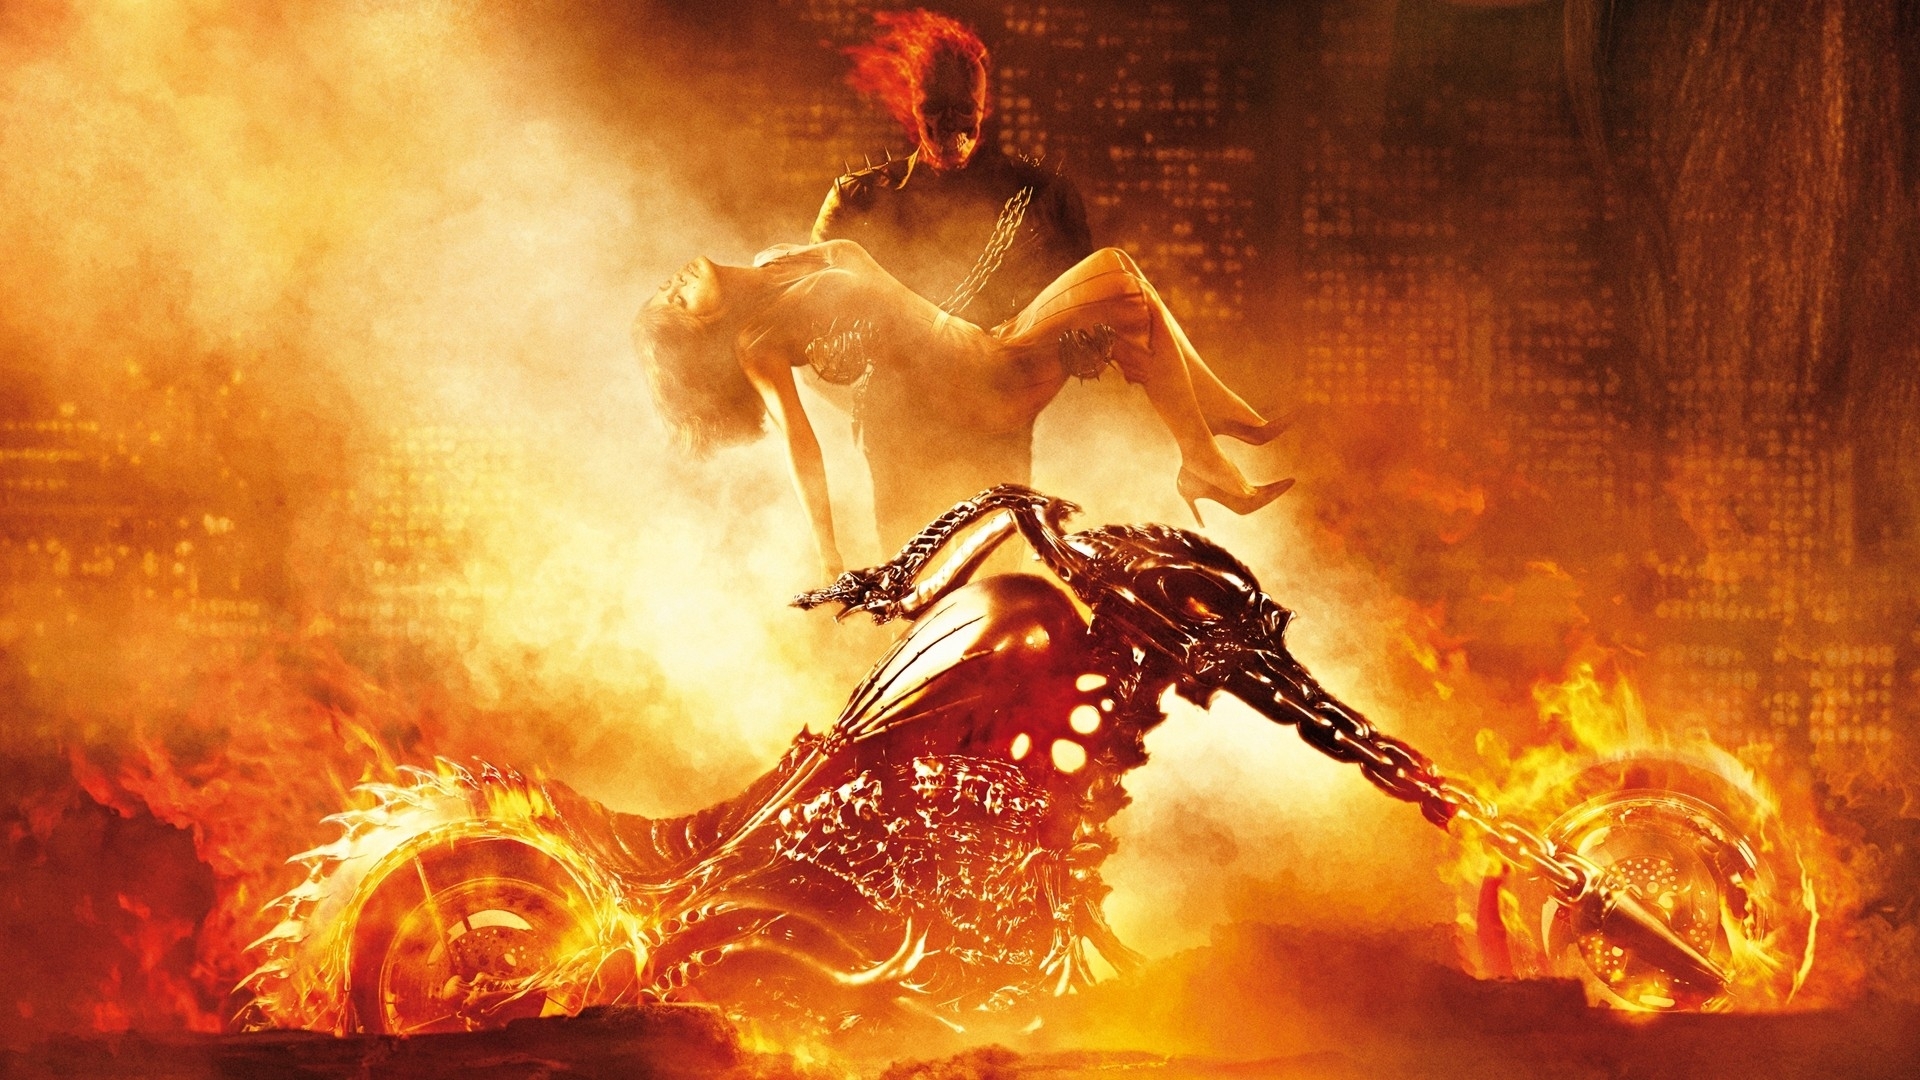 Ghost Rider Dark Ics Games Evil Fire Love Romance